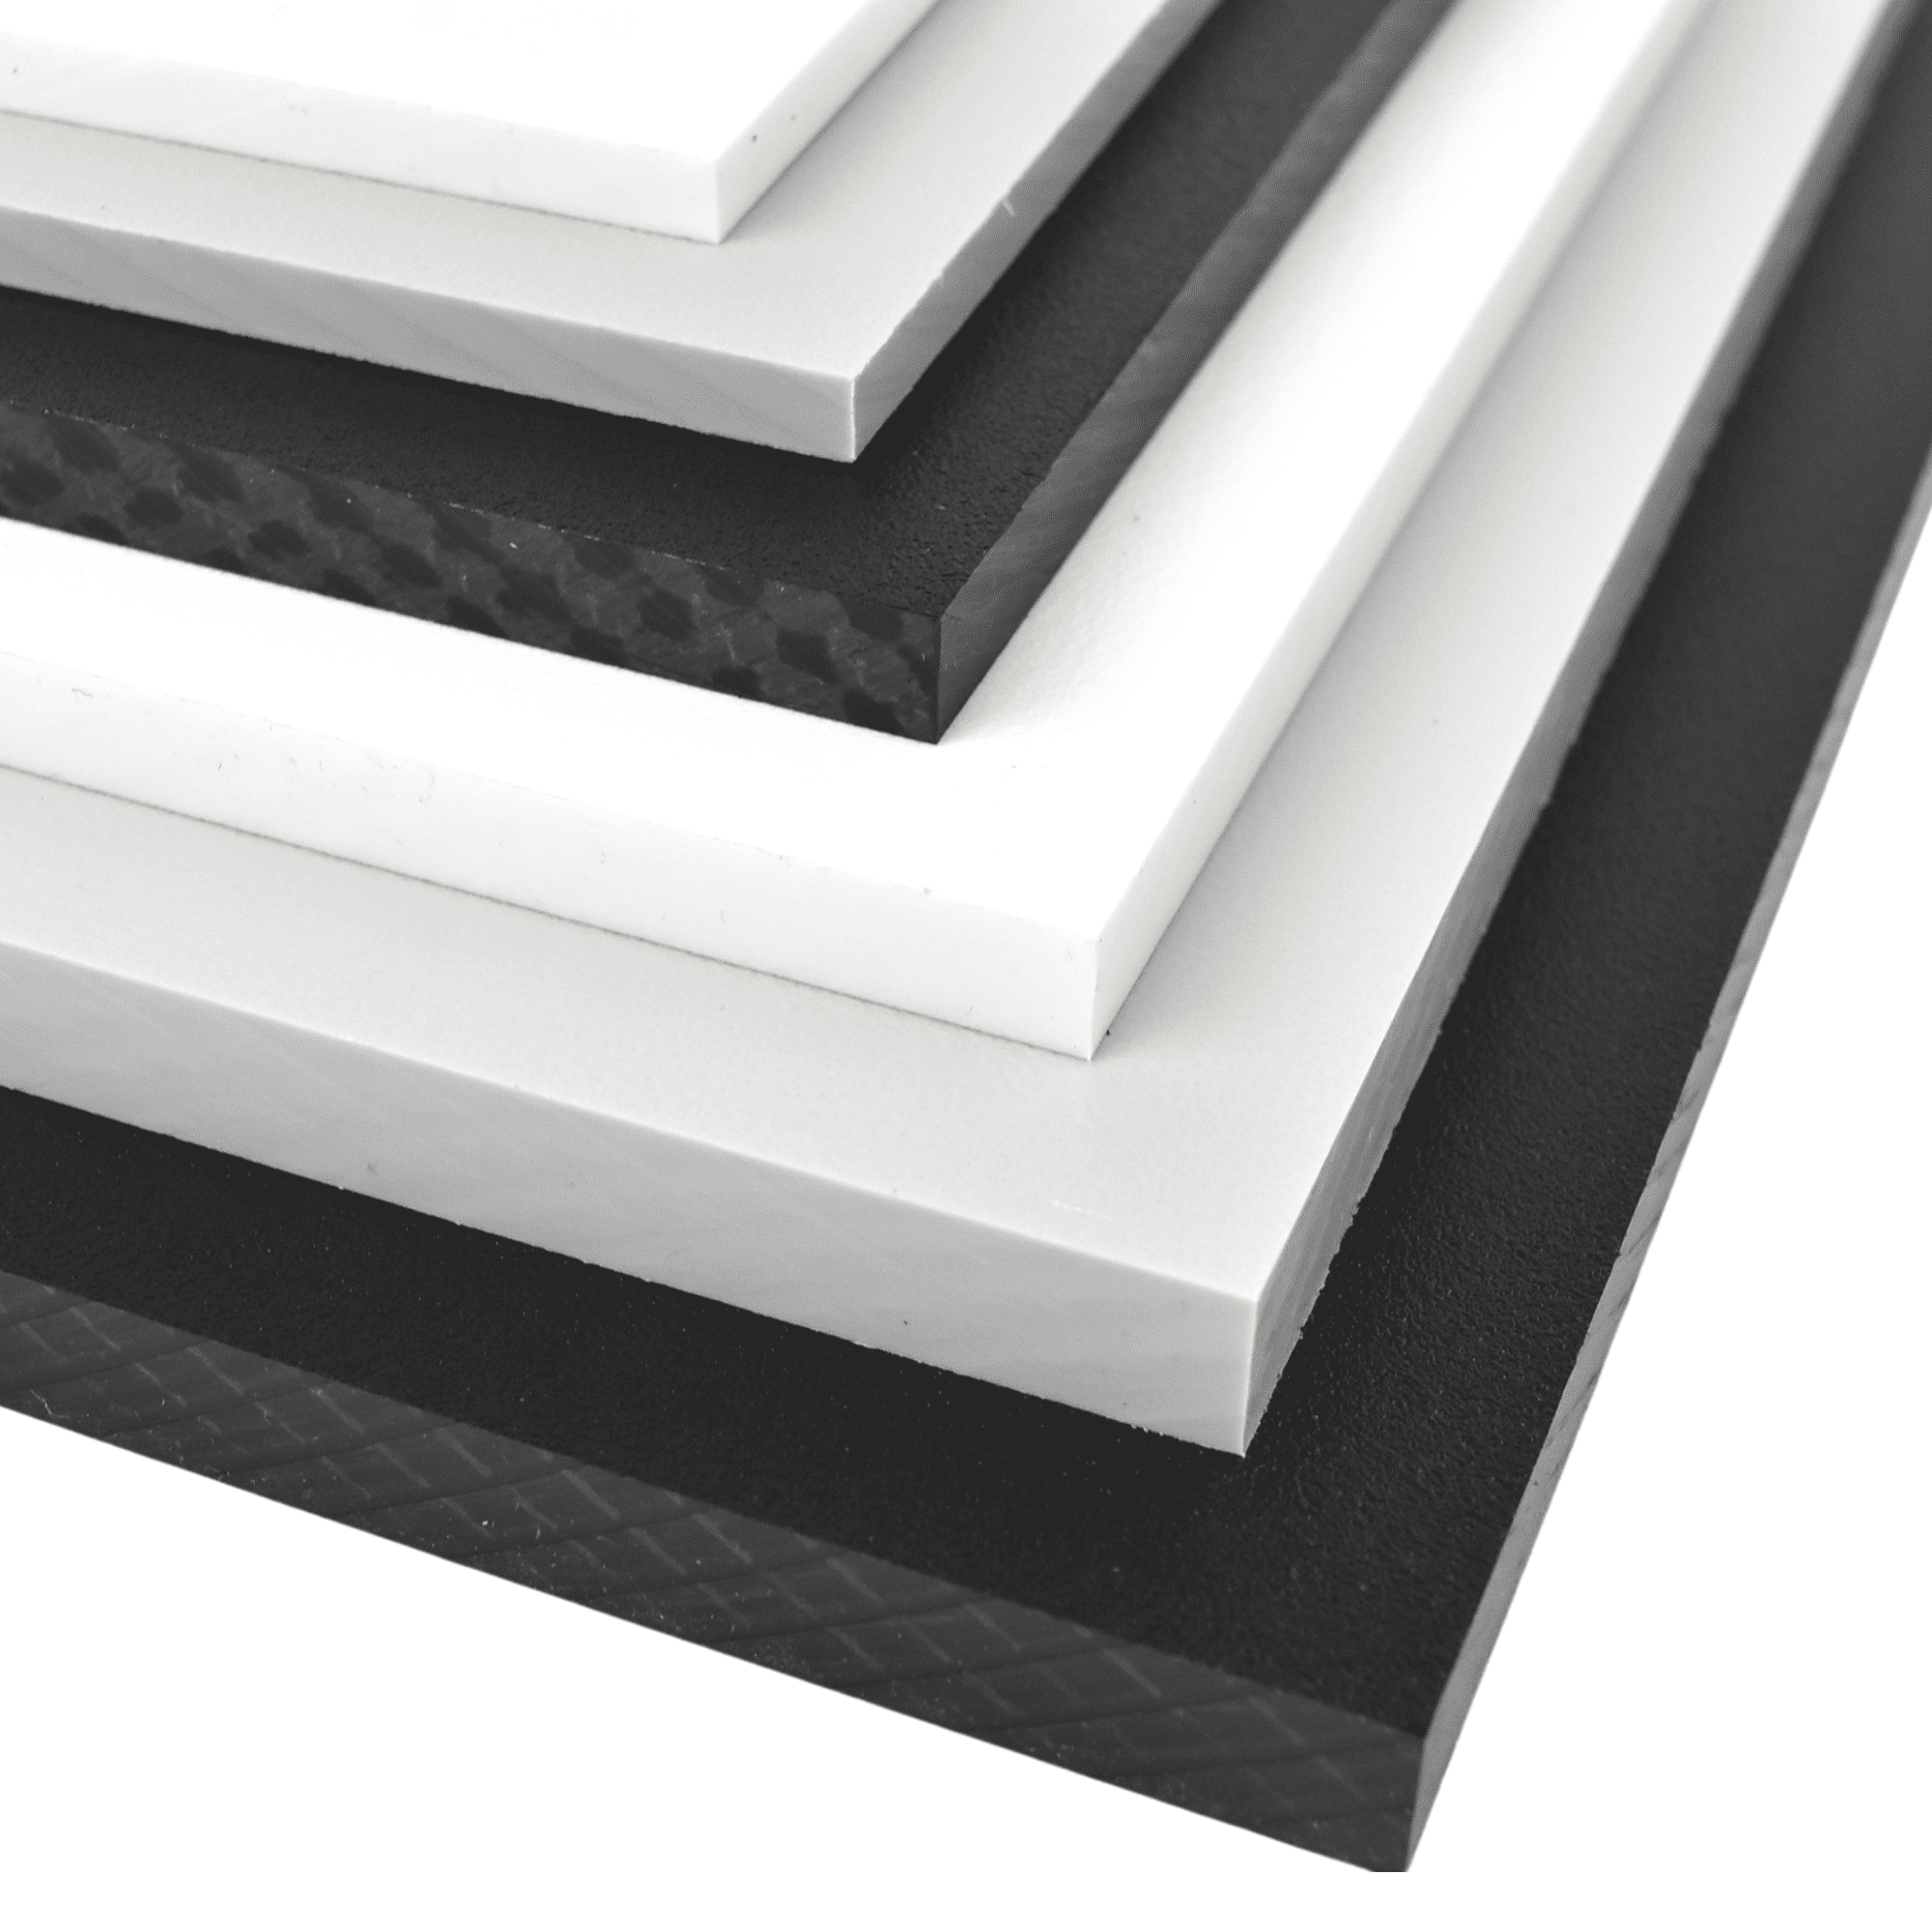 High Density Polyethylene Plastic Sheet 1/2" x 12" x 24" Black Smooth HDPE 